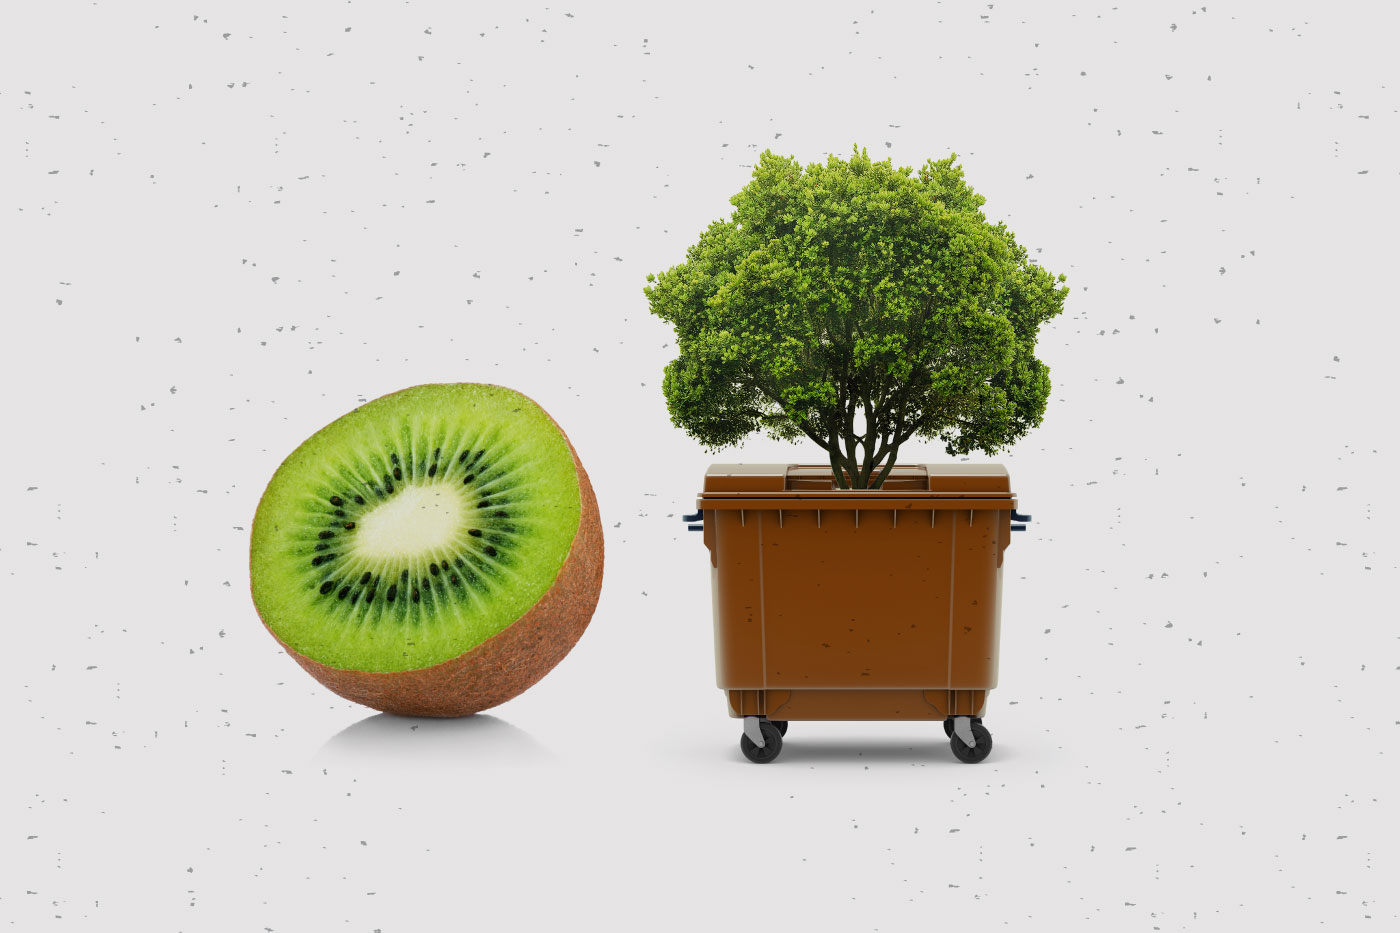 Recicla la organica green marketing dobleessa